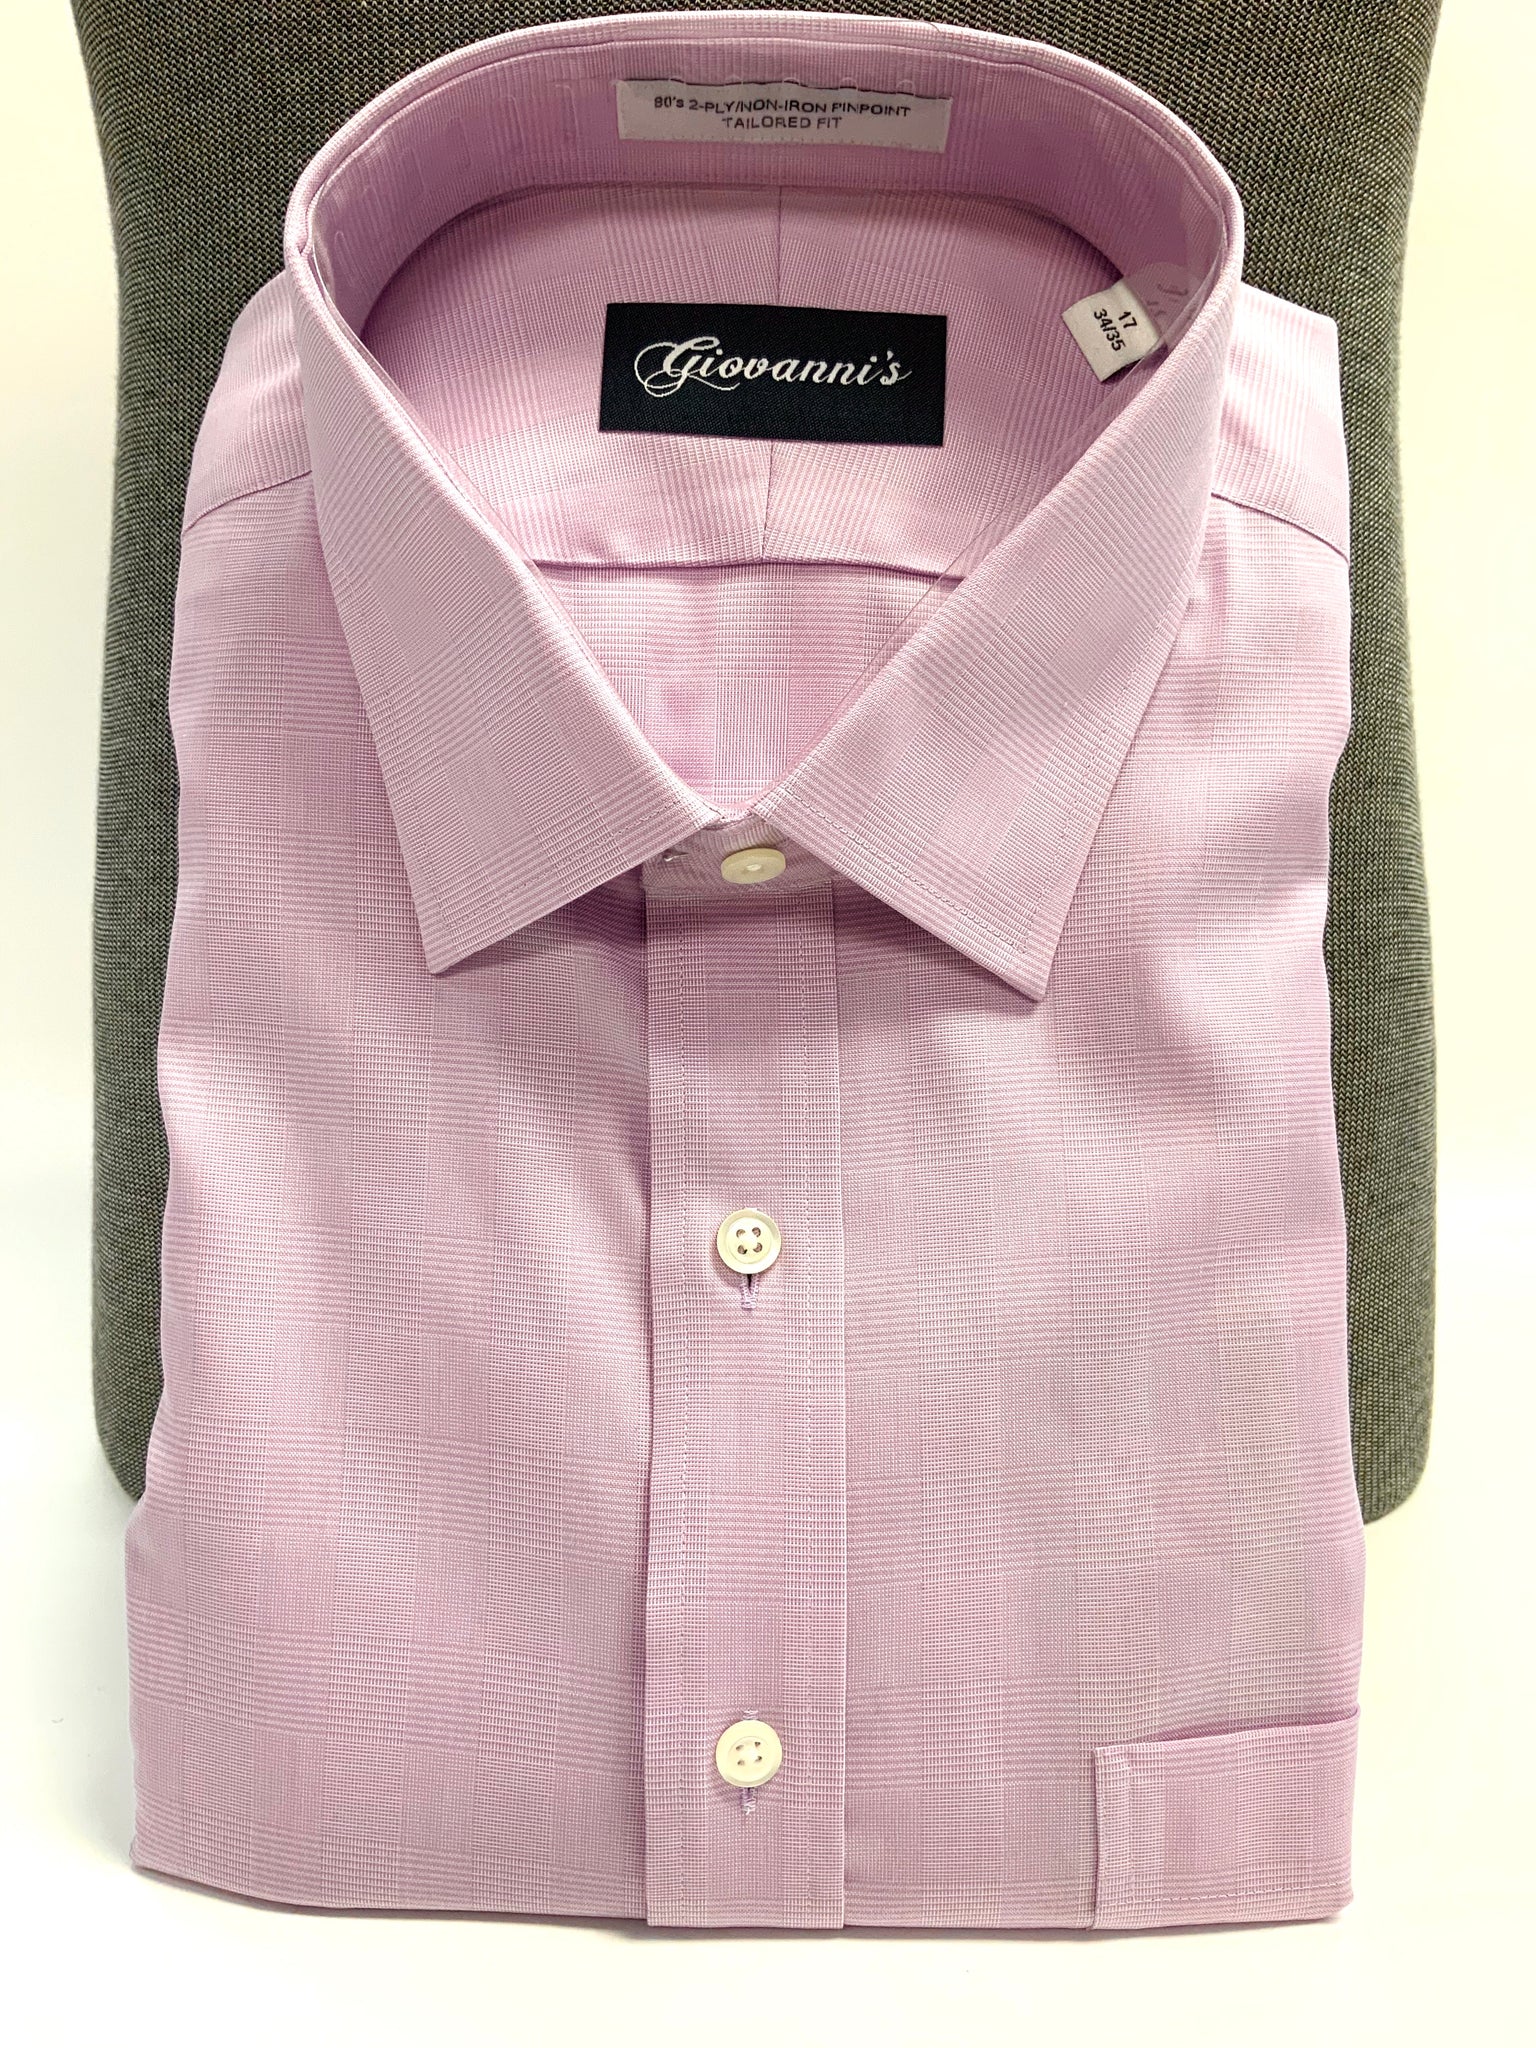 Giovanni's Modified Spread Glen Plaid Dress Shirt - Lavendar-51